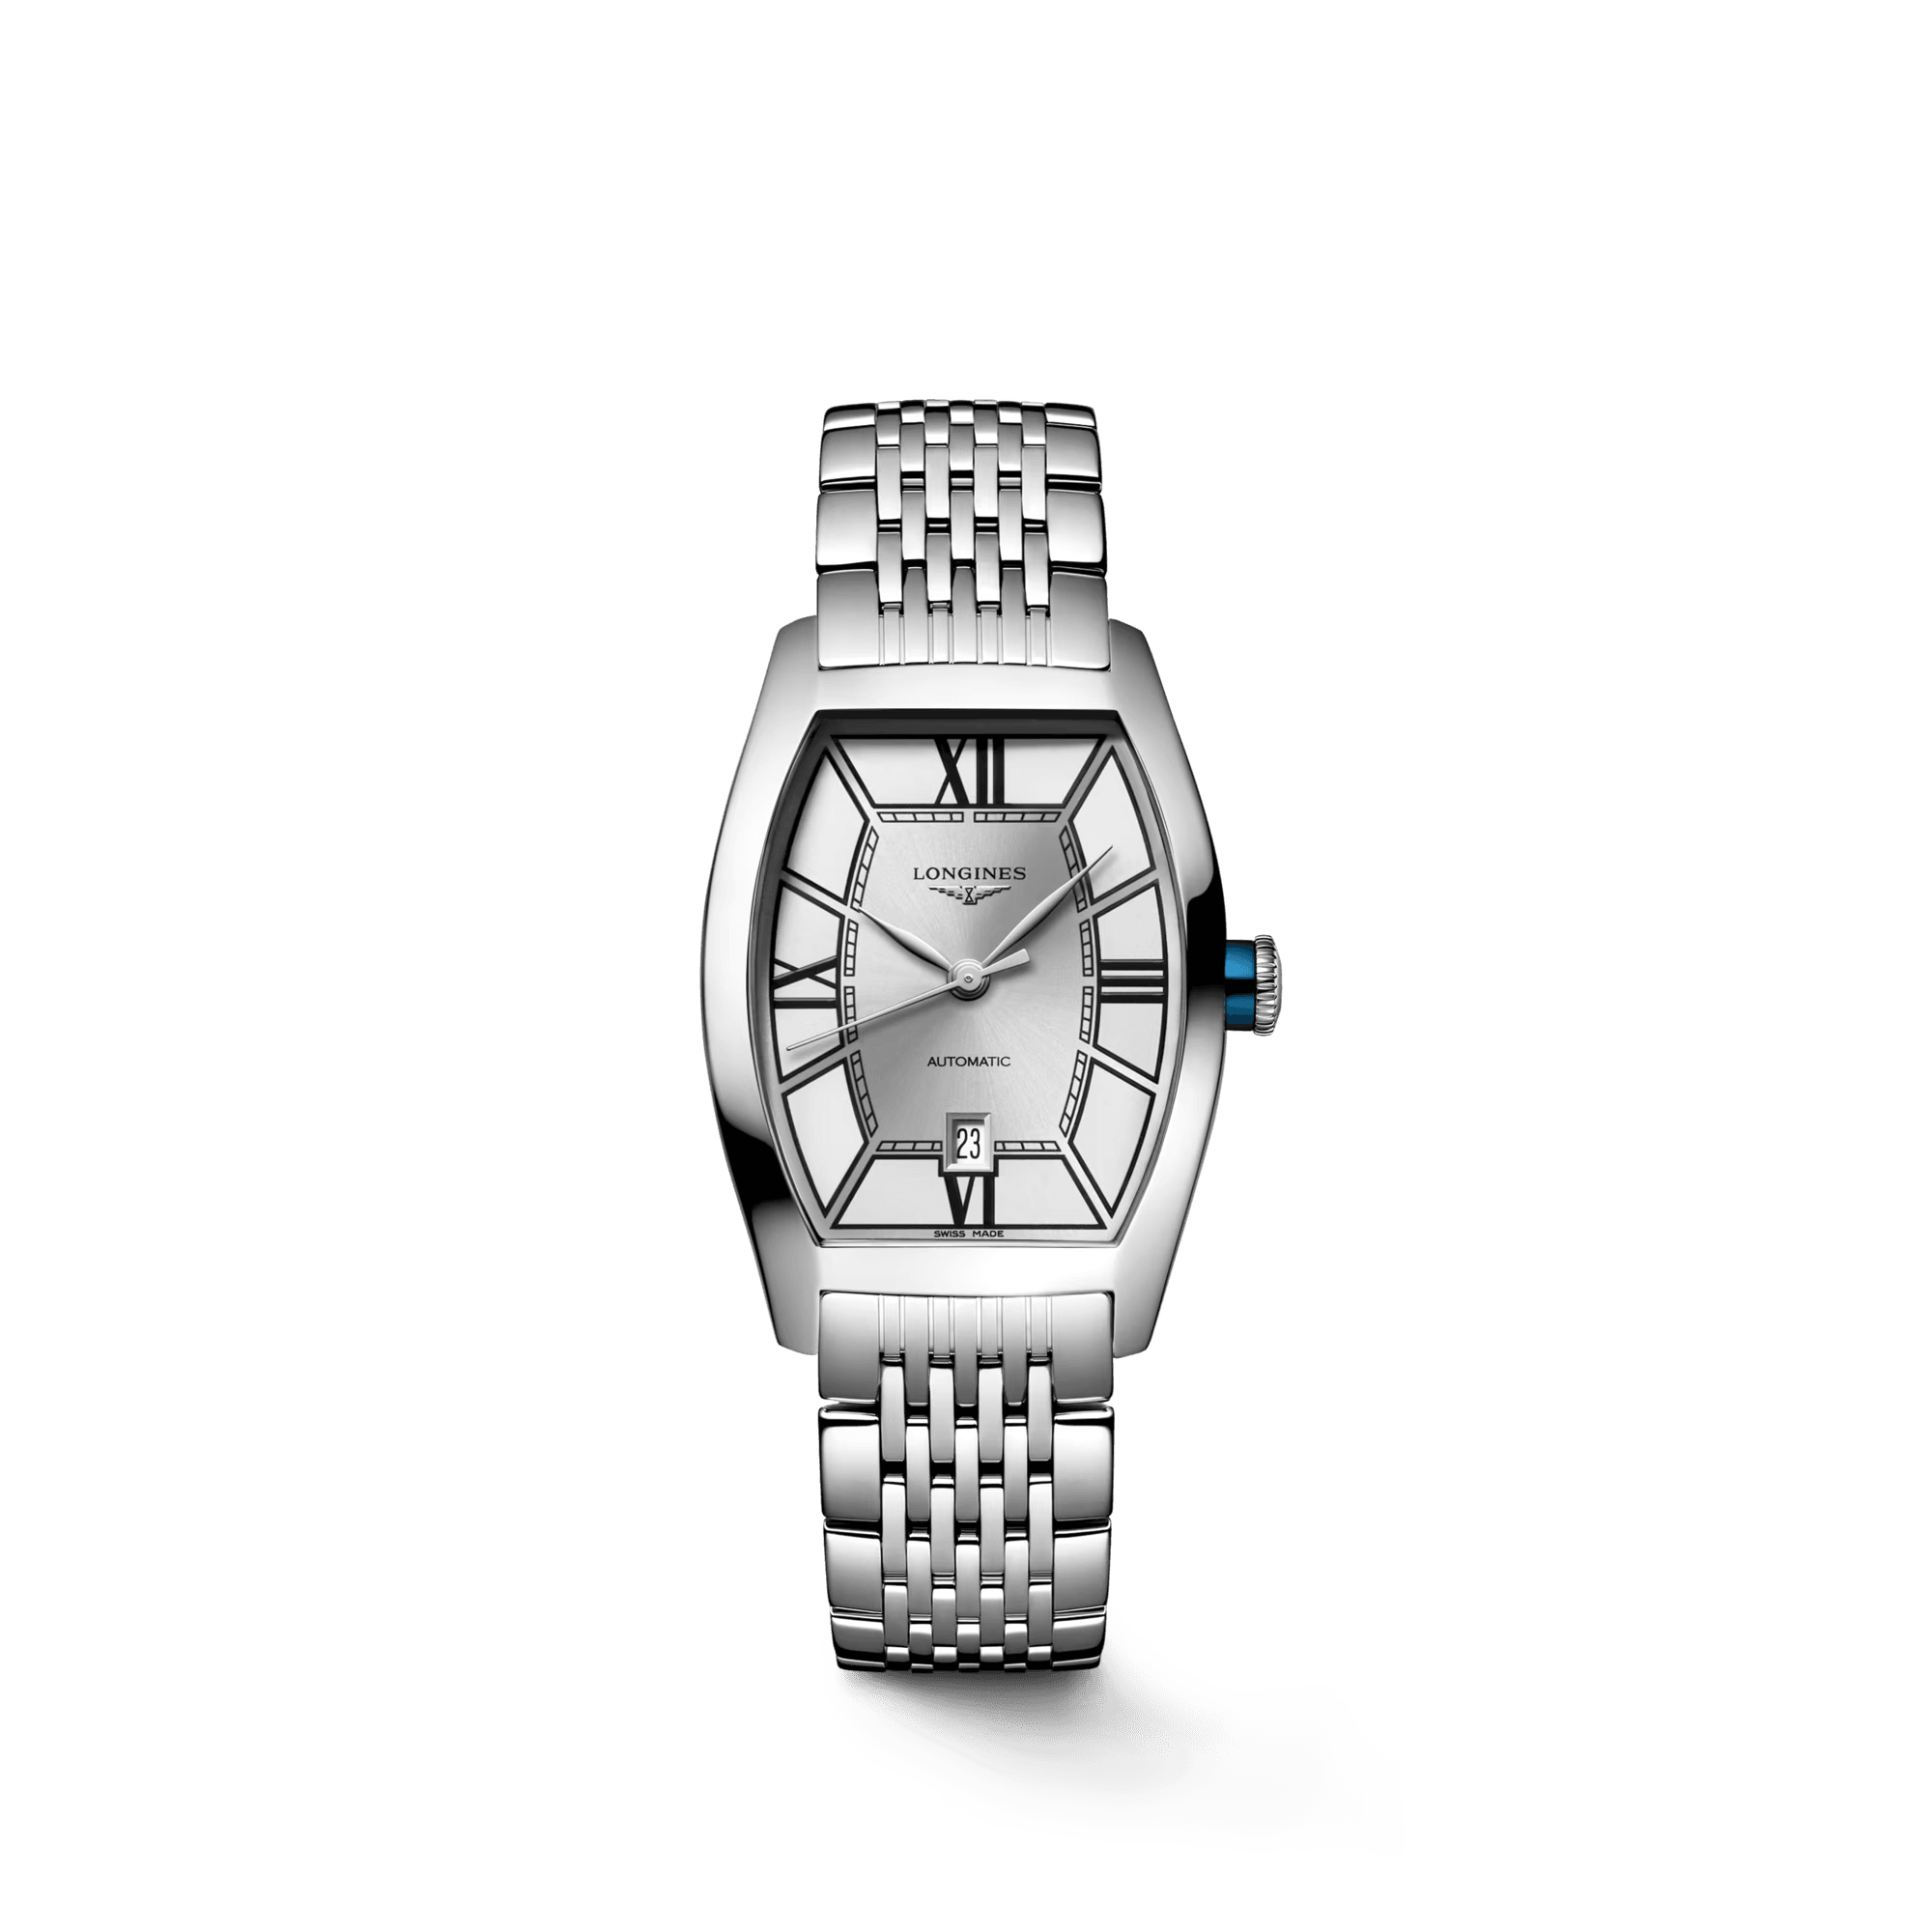 Longines Evidenza Automatic Women's Watch L21424766